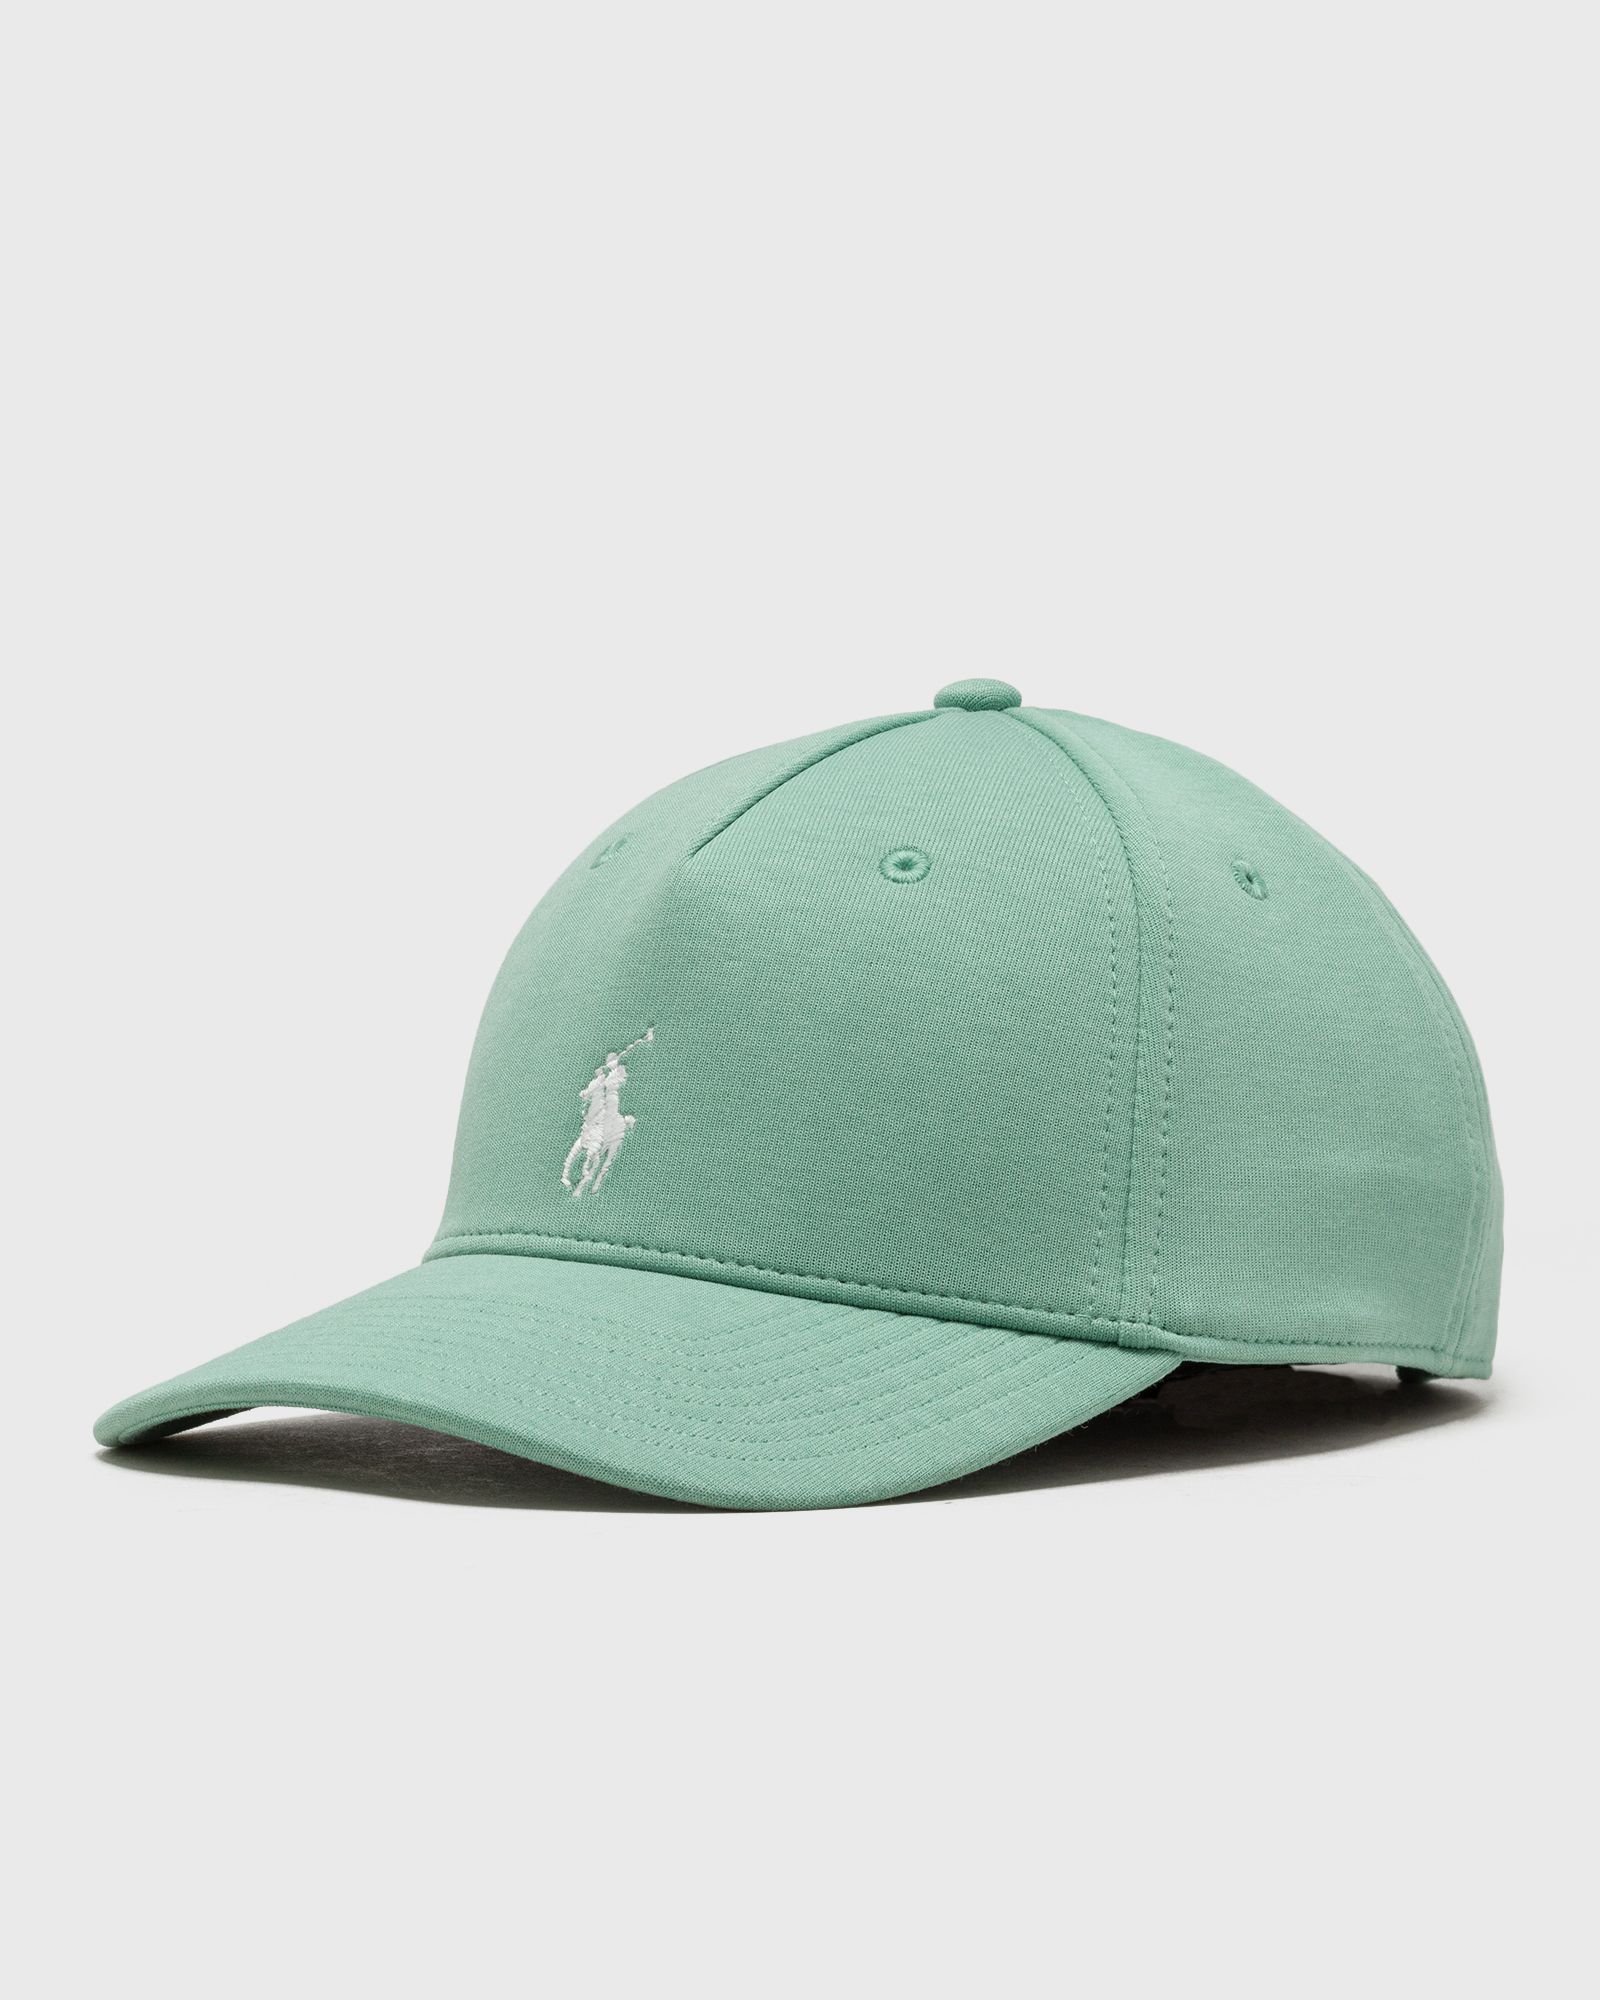 Polo Ralph Lauren - modern cap men caps green in größe:one size